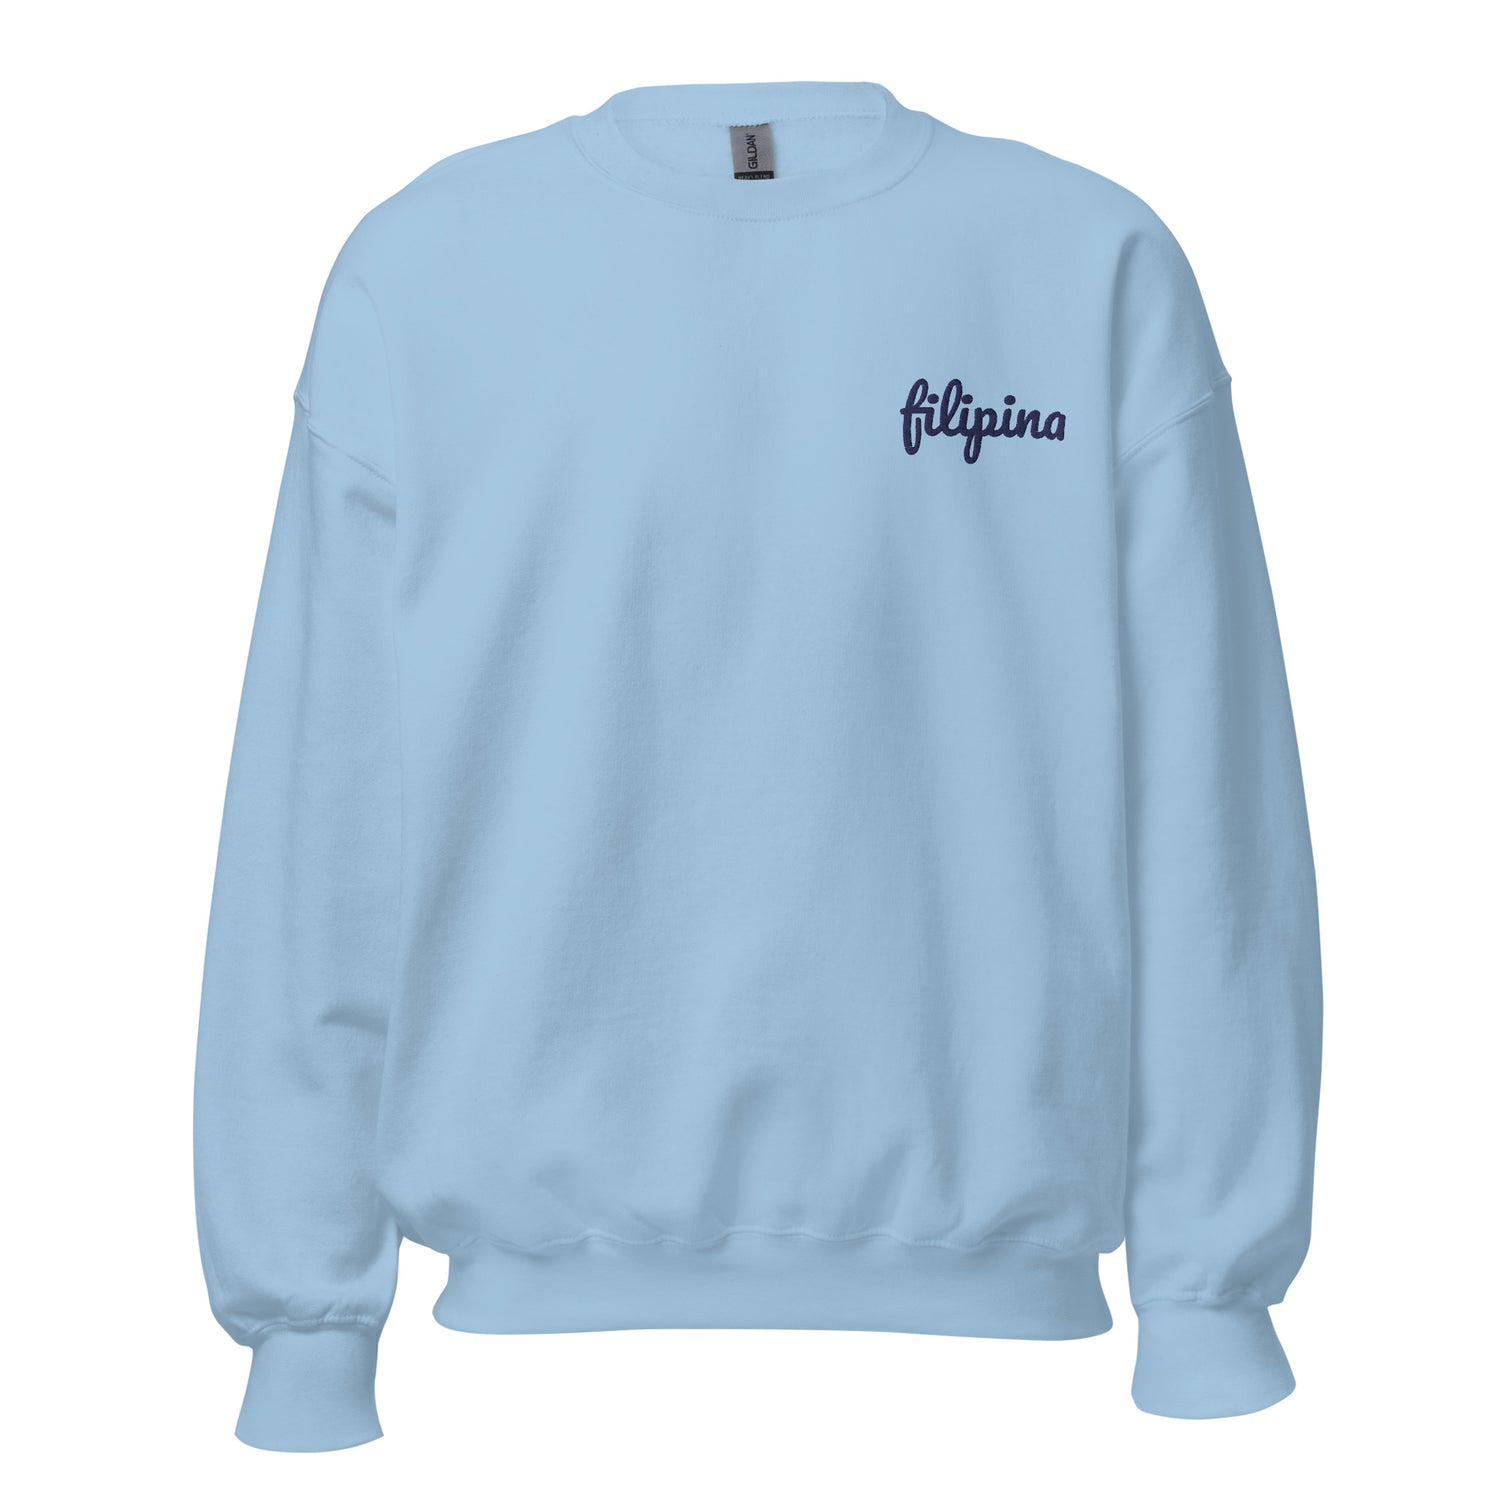 Filipino Sweatshirt Crew Neck Filipina Statement Embroidered Merch in color variant Light Blue